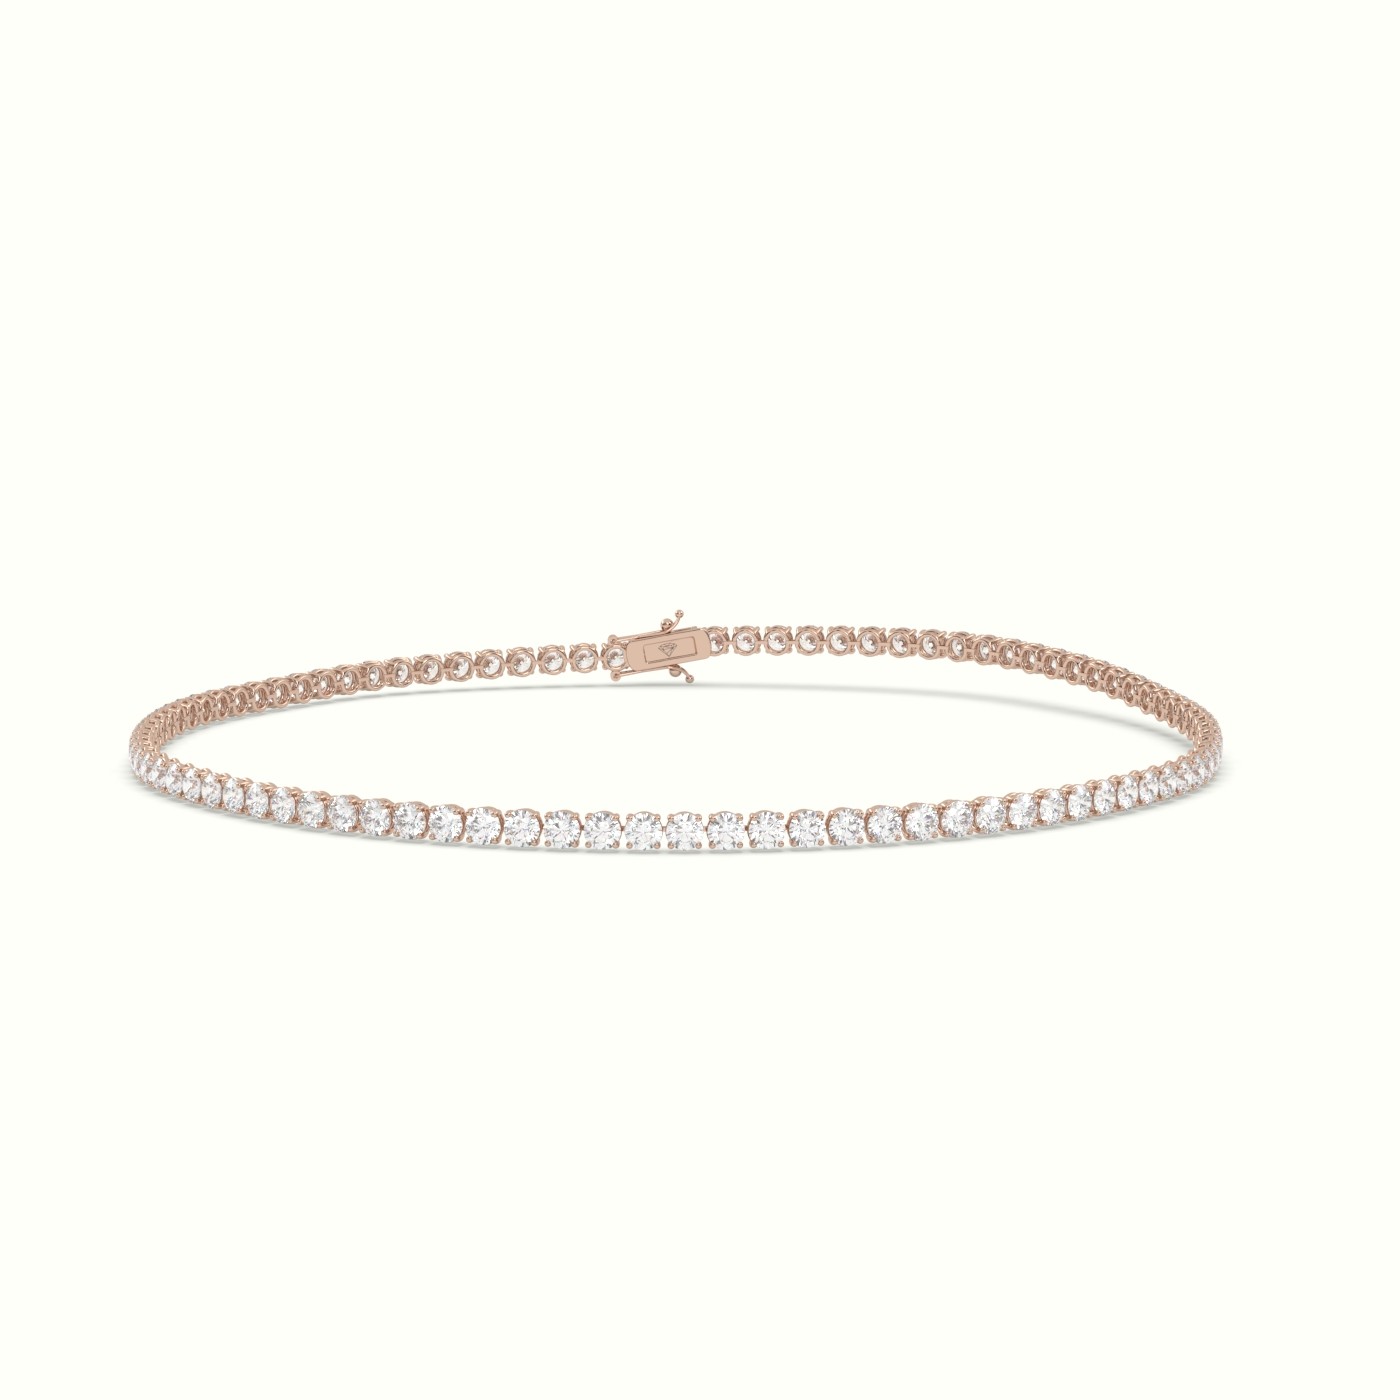 18k rose gold  tennis bracelet 1.90 carat diamonds